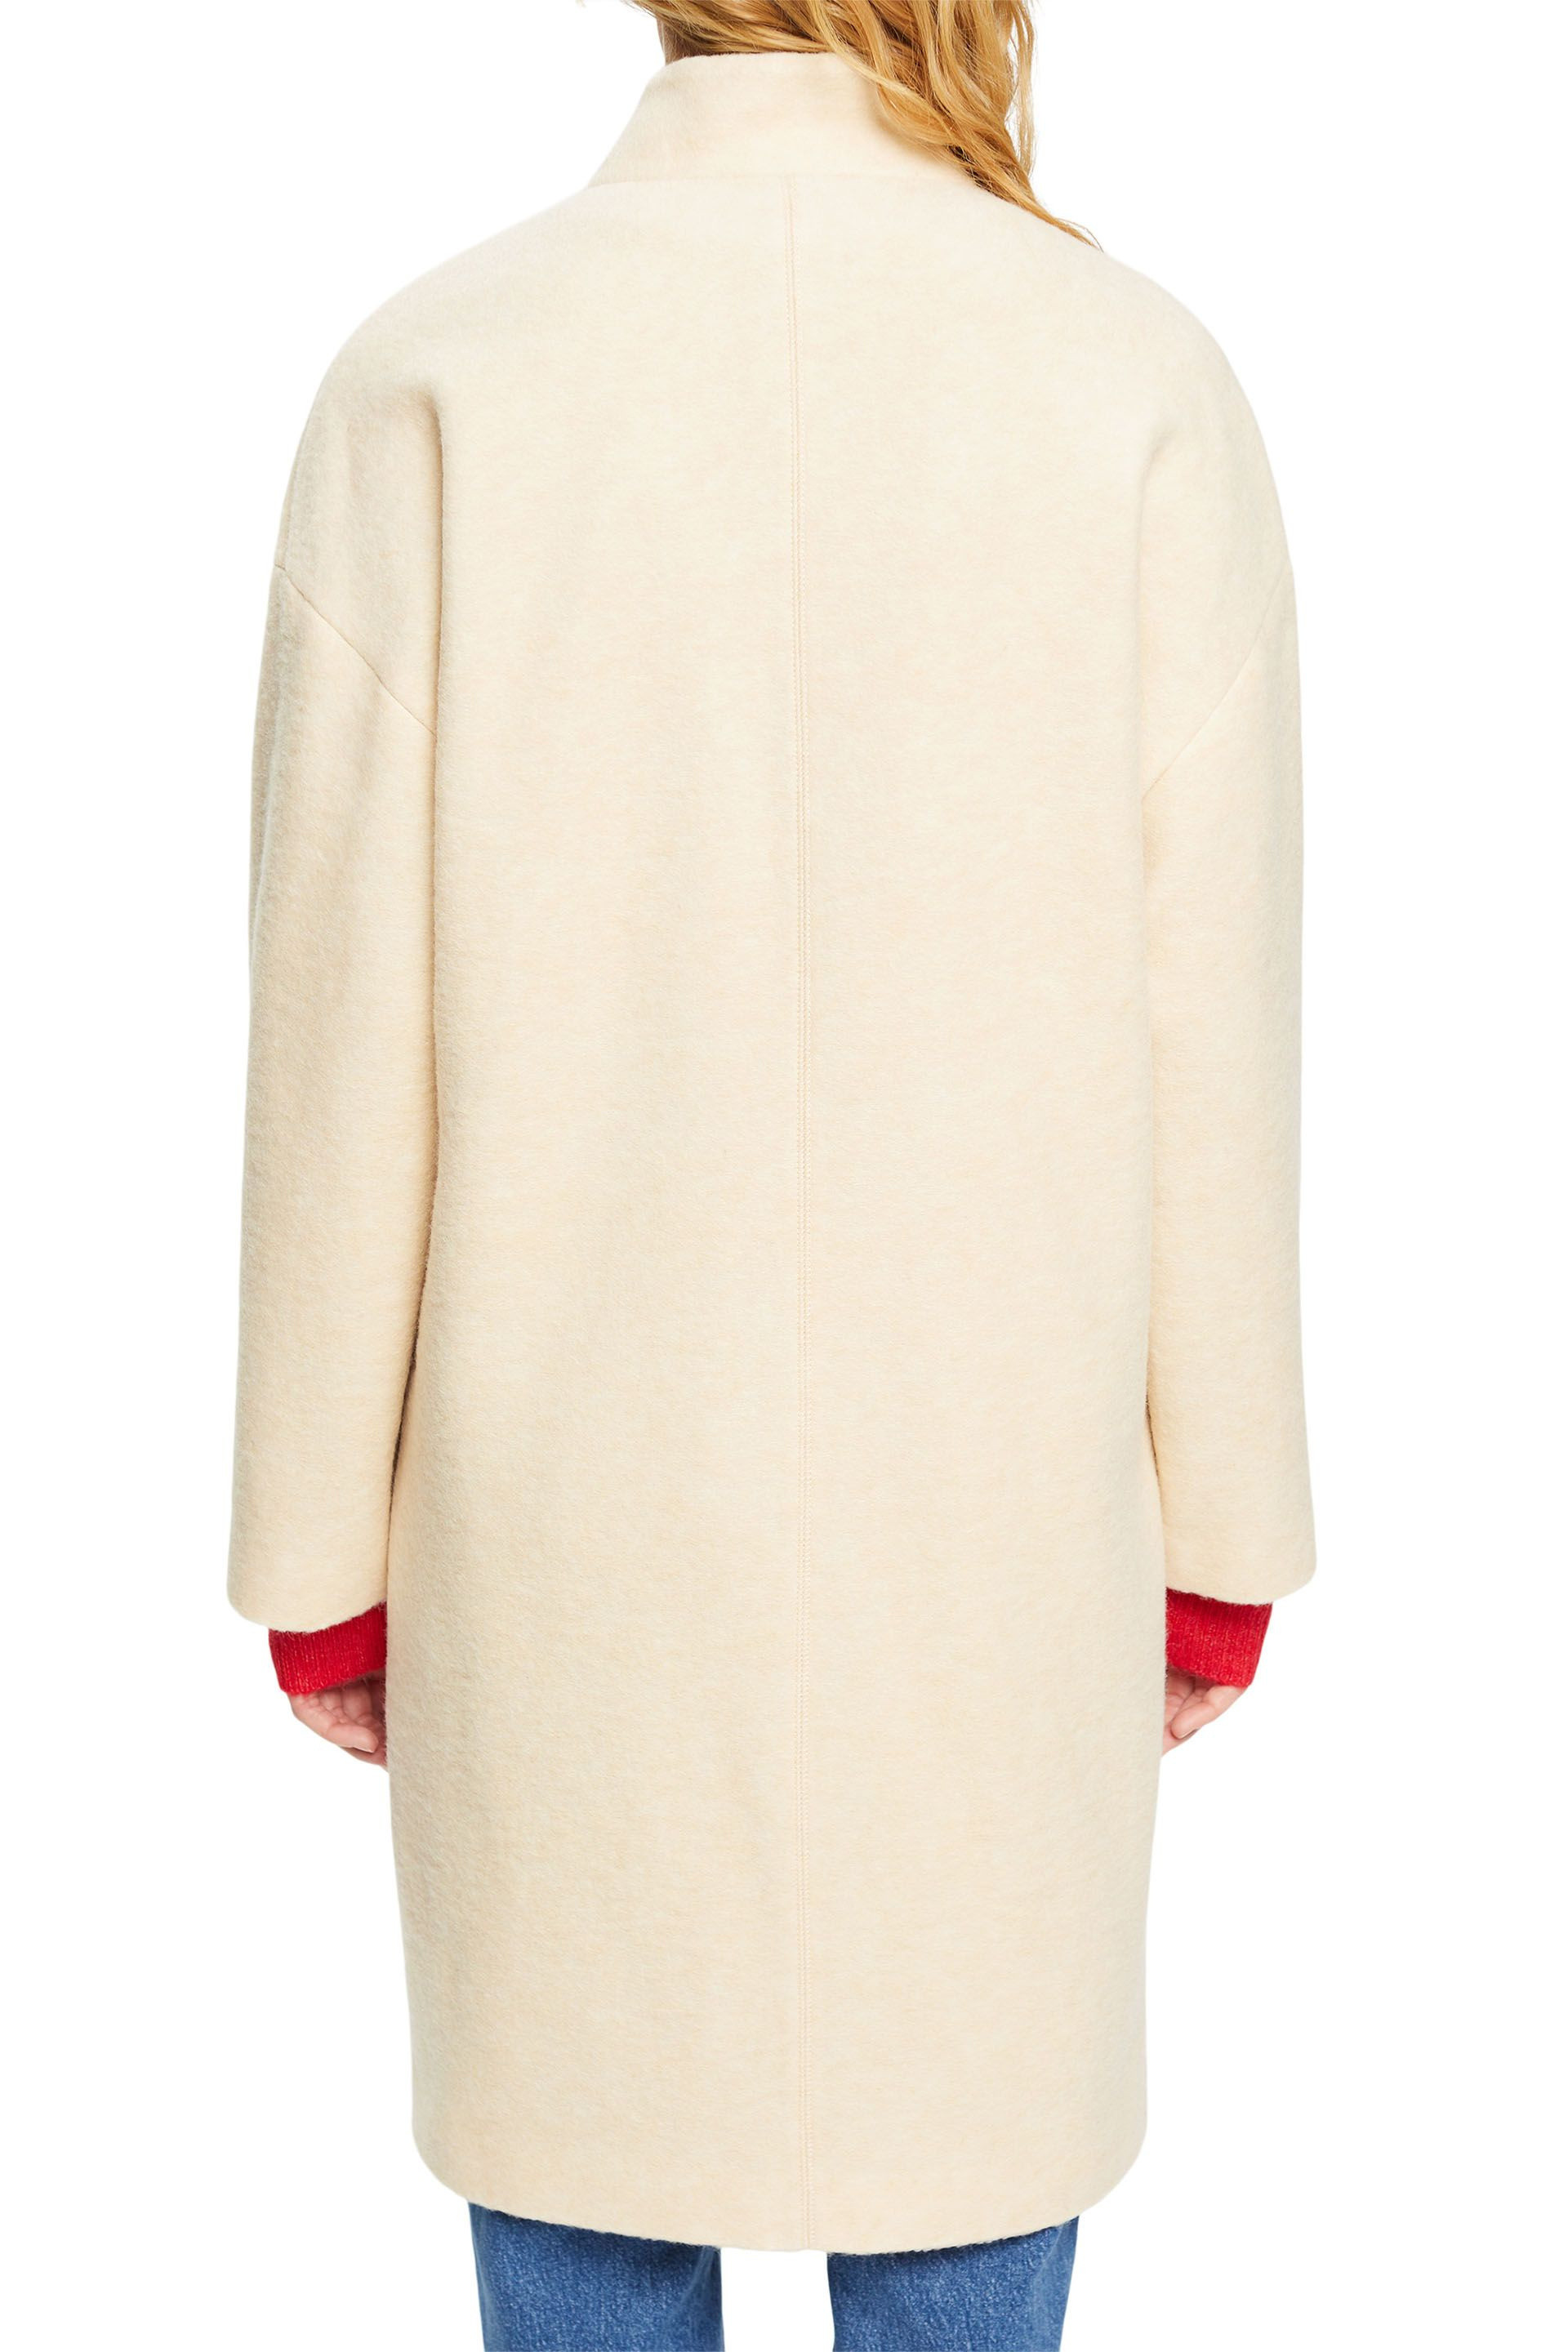 Cappotto in misto lana con collo revers, Beige, large image number 3